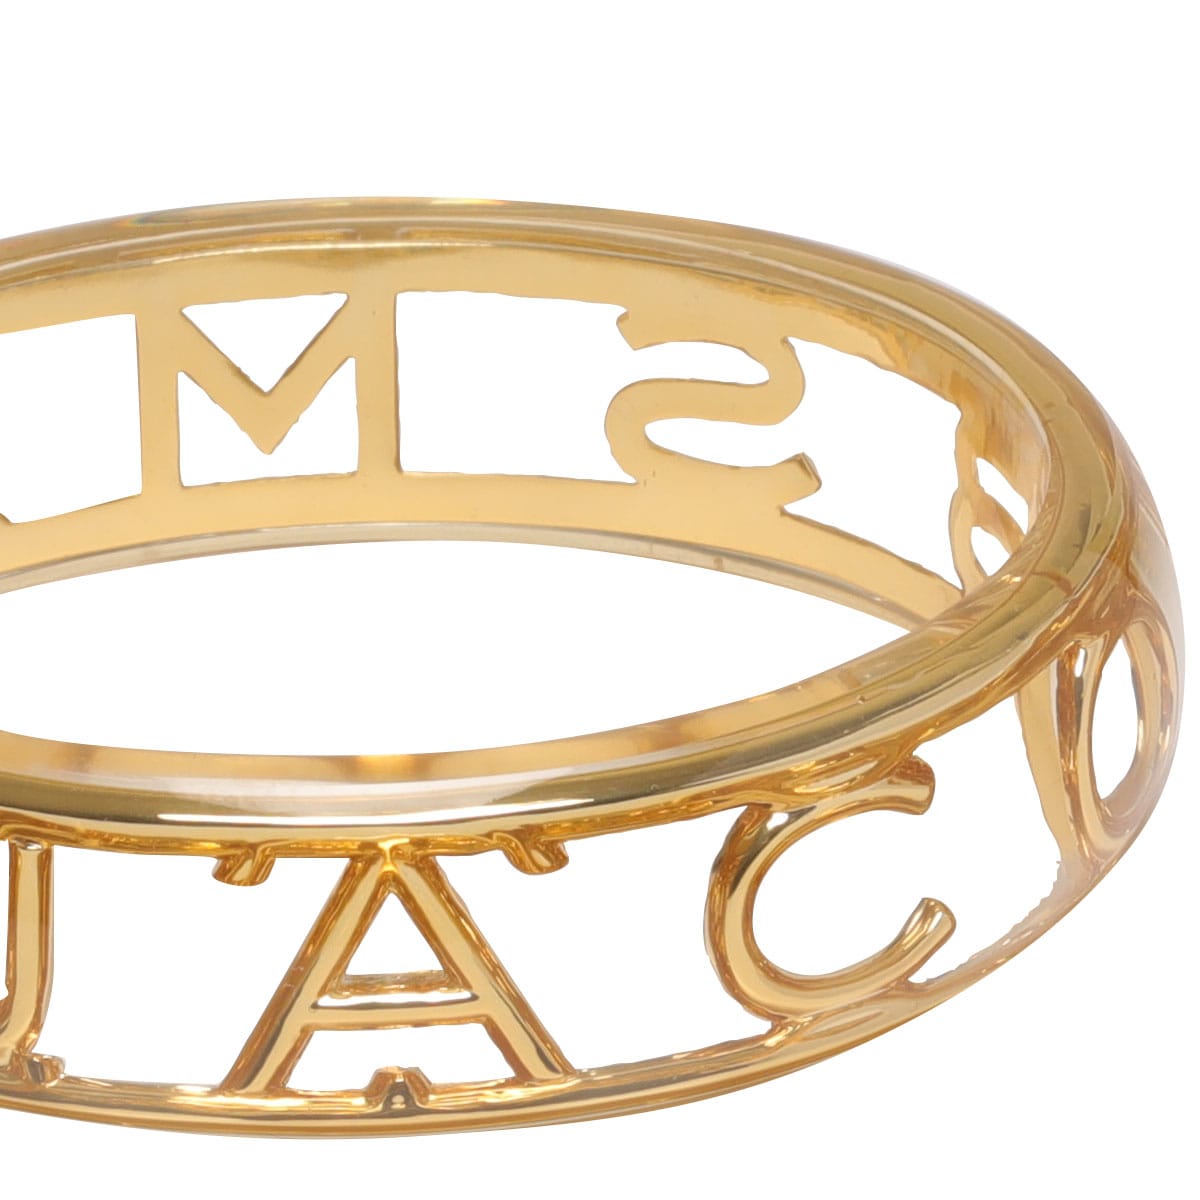 Marc Jacobs The Monogram Cuff Bracelet